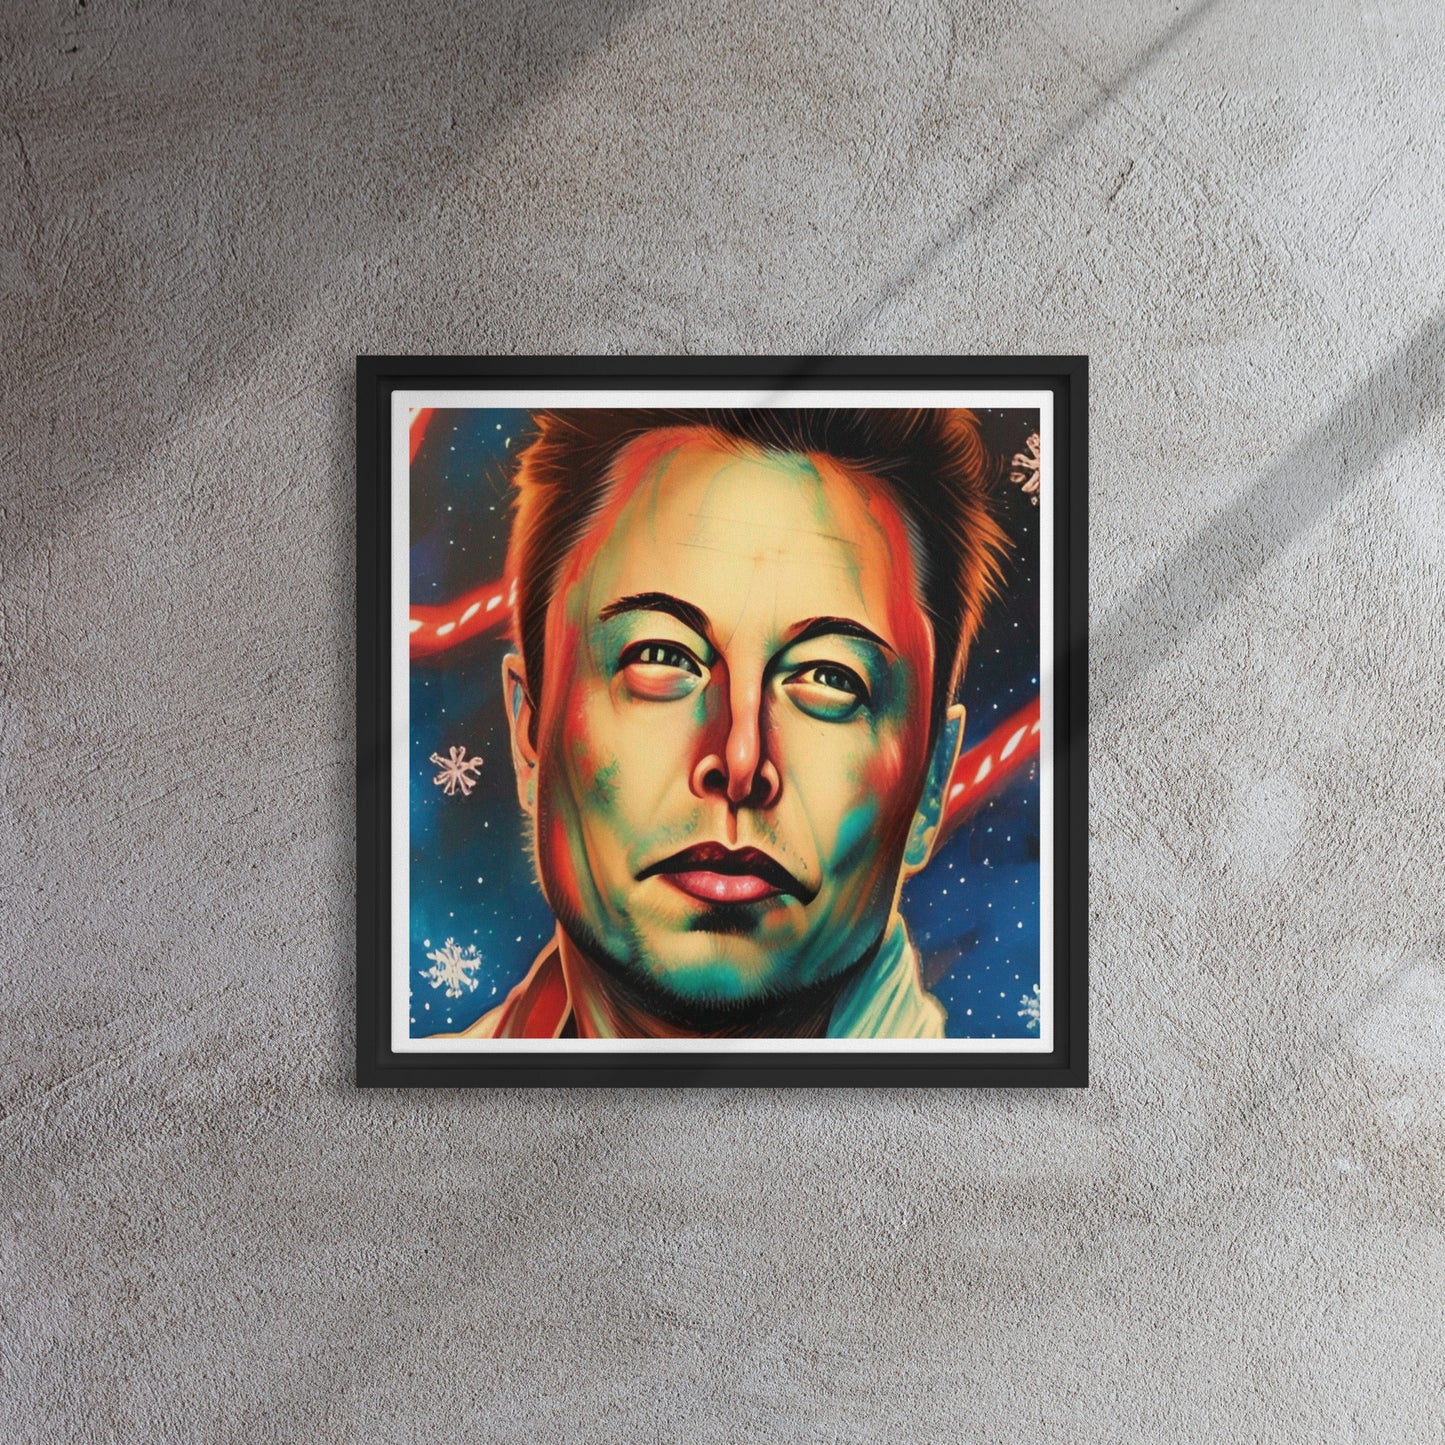 Framed canvas Elon Musk portrait